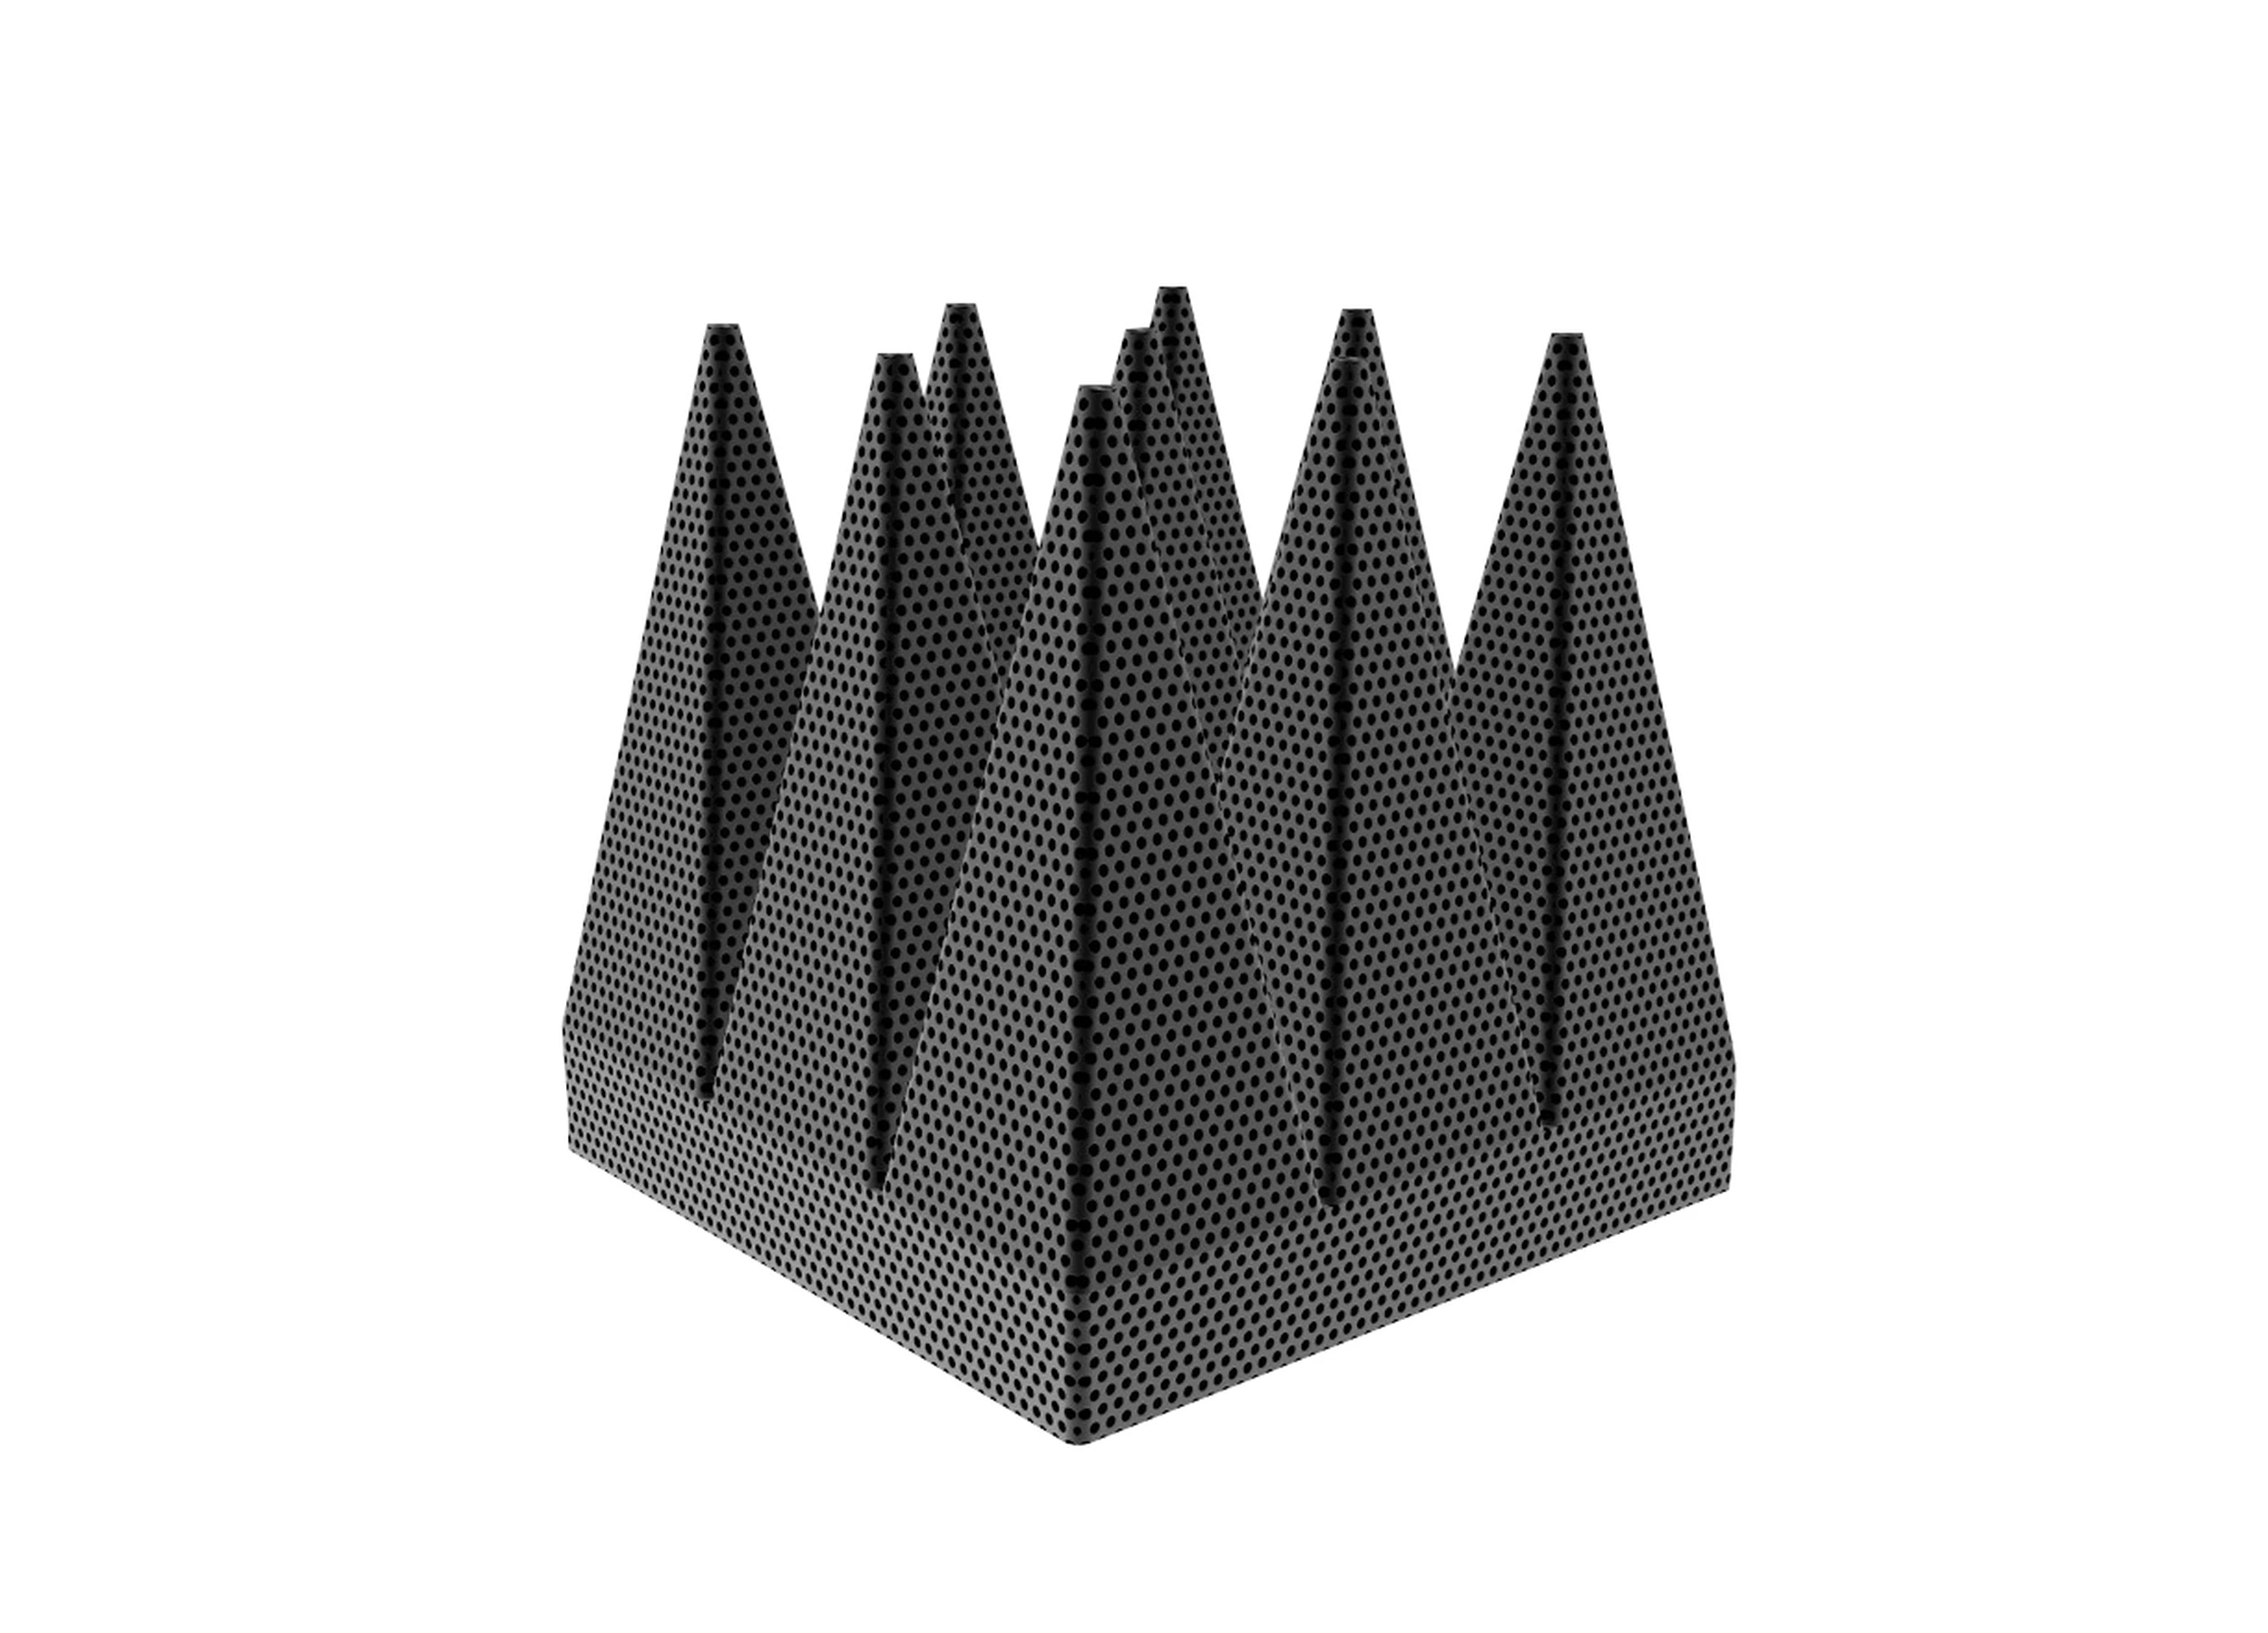 6 Pyramid High Power Handling RF Absorber Panel